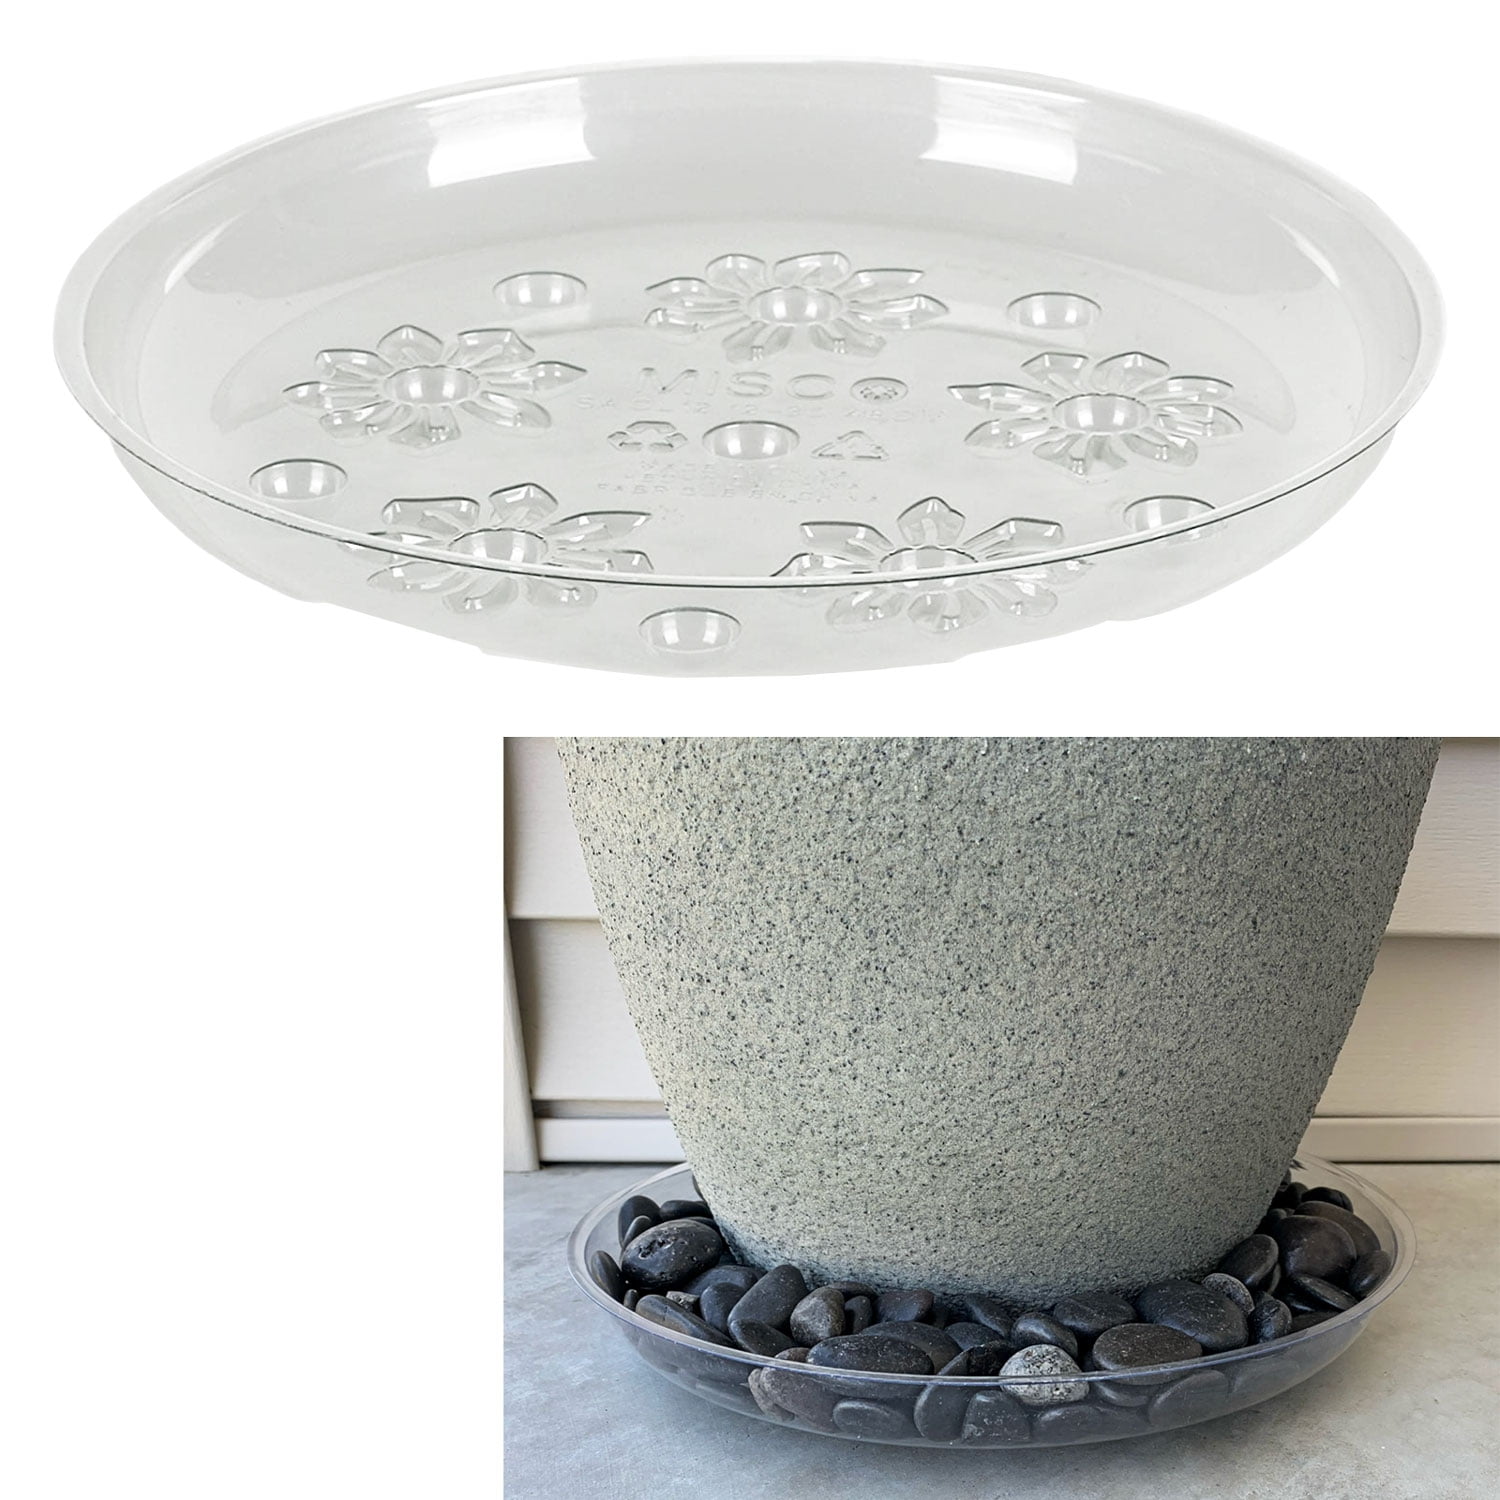 Plastic Round Plant Pot Flowerpot Saucer Drip Planter Water Tray Base Dish 